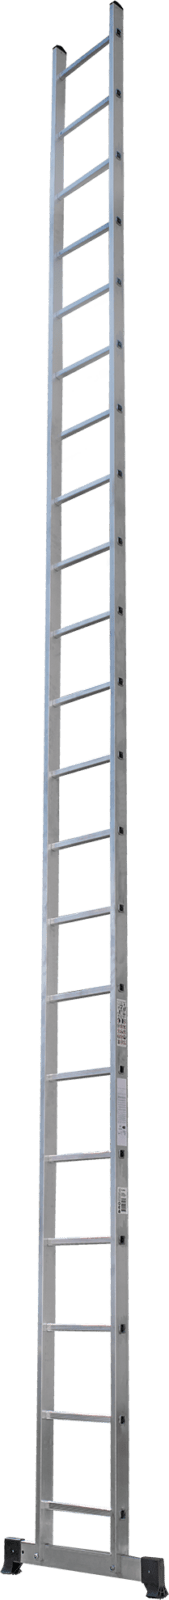 Лестница алюминиевая приставная NV1210 артикул 1210121